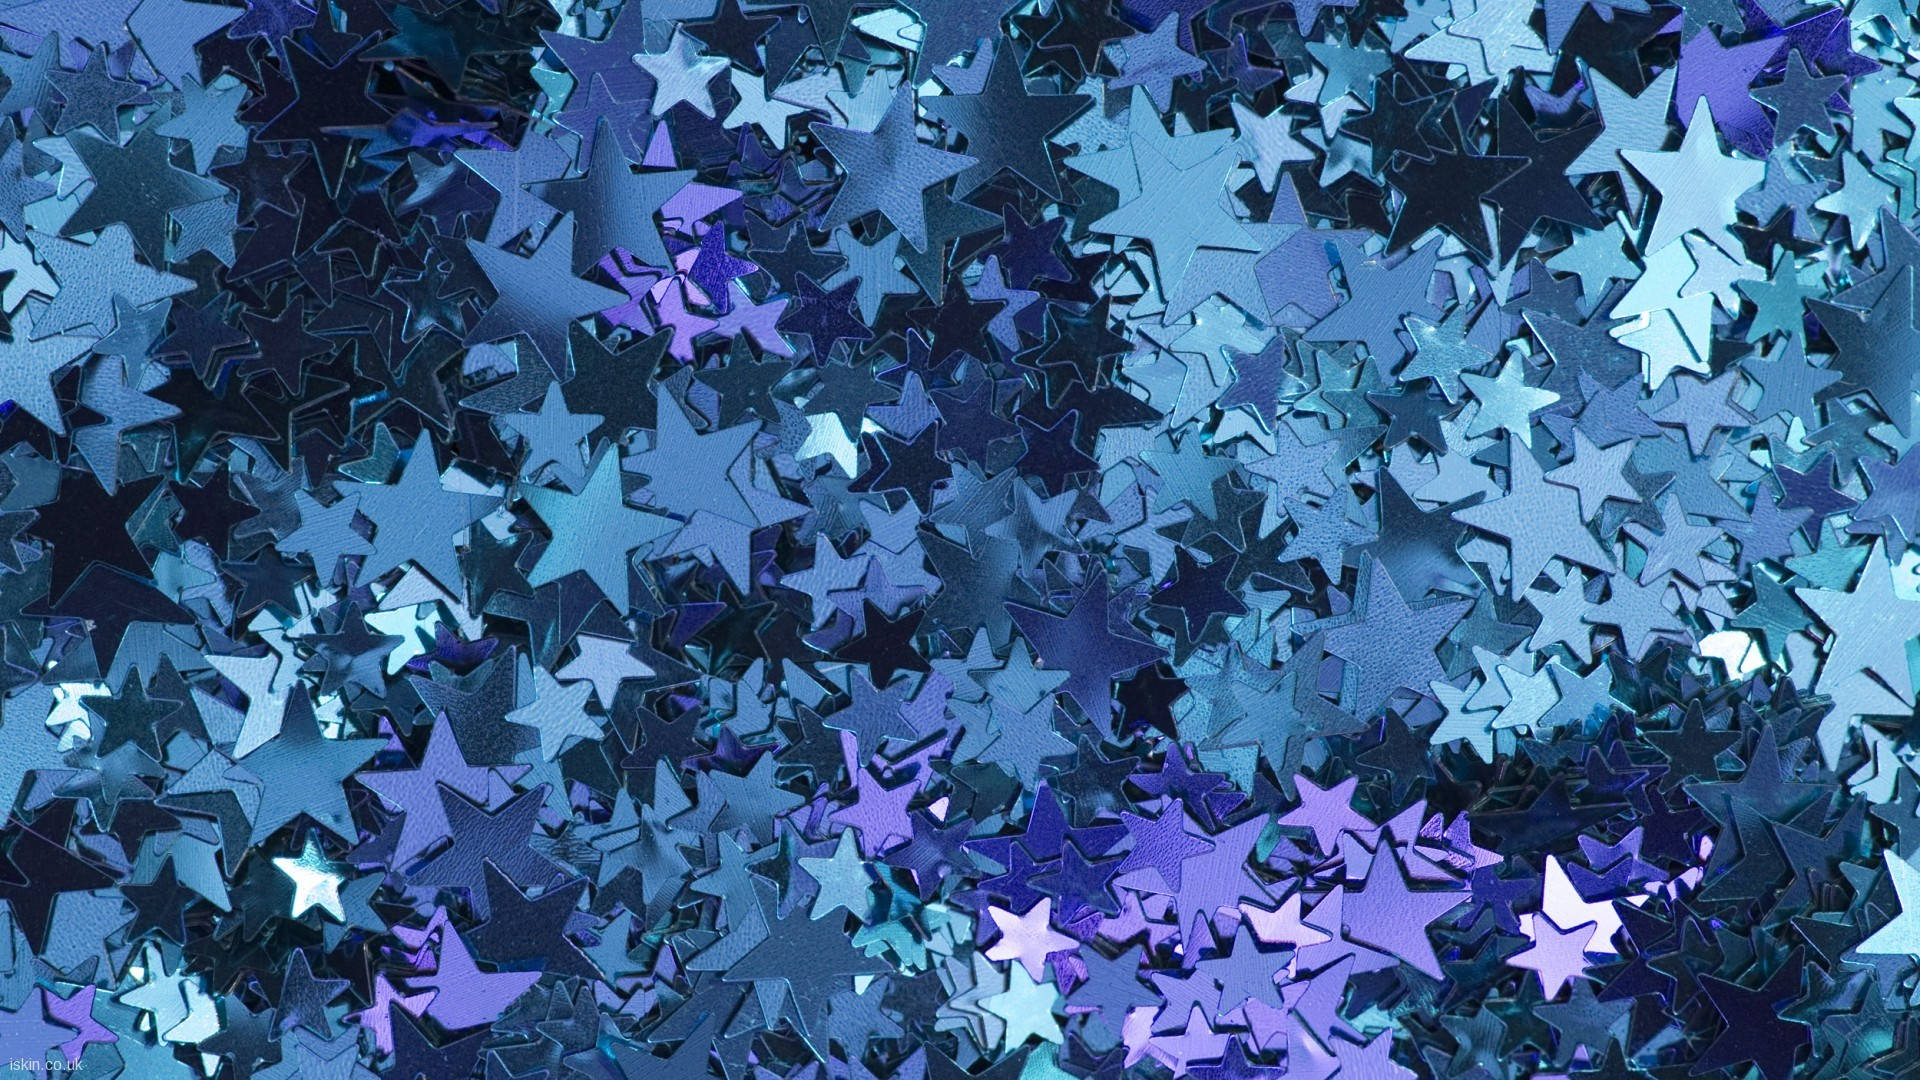 100+] Blue Glitter Backgrounds